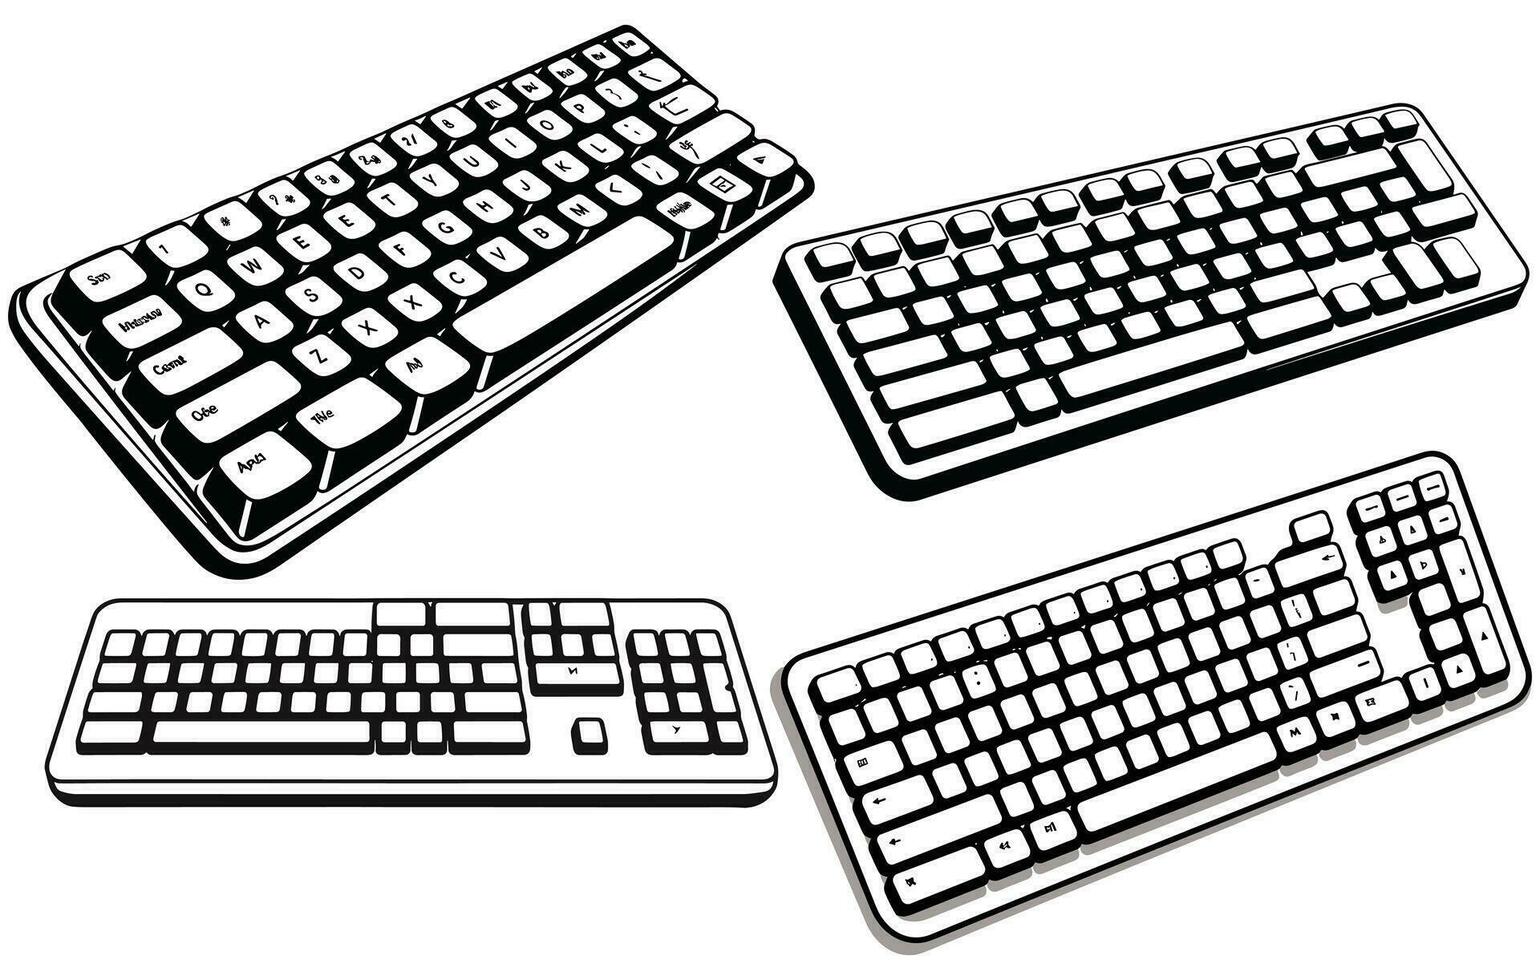 Keyboard. Silhouette, black, computer keyboard, keyboard keys, English layout vector